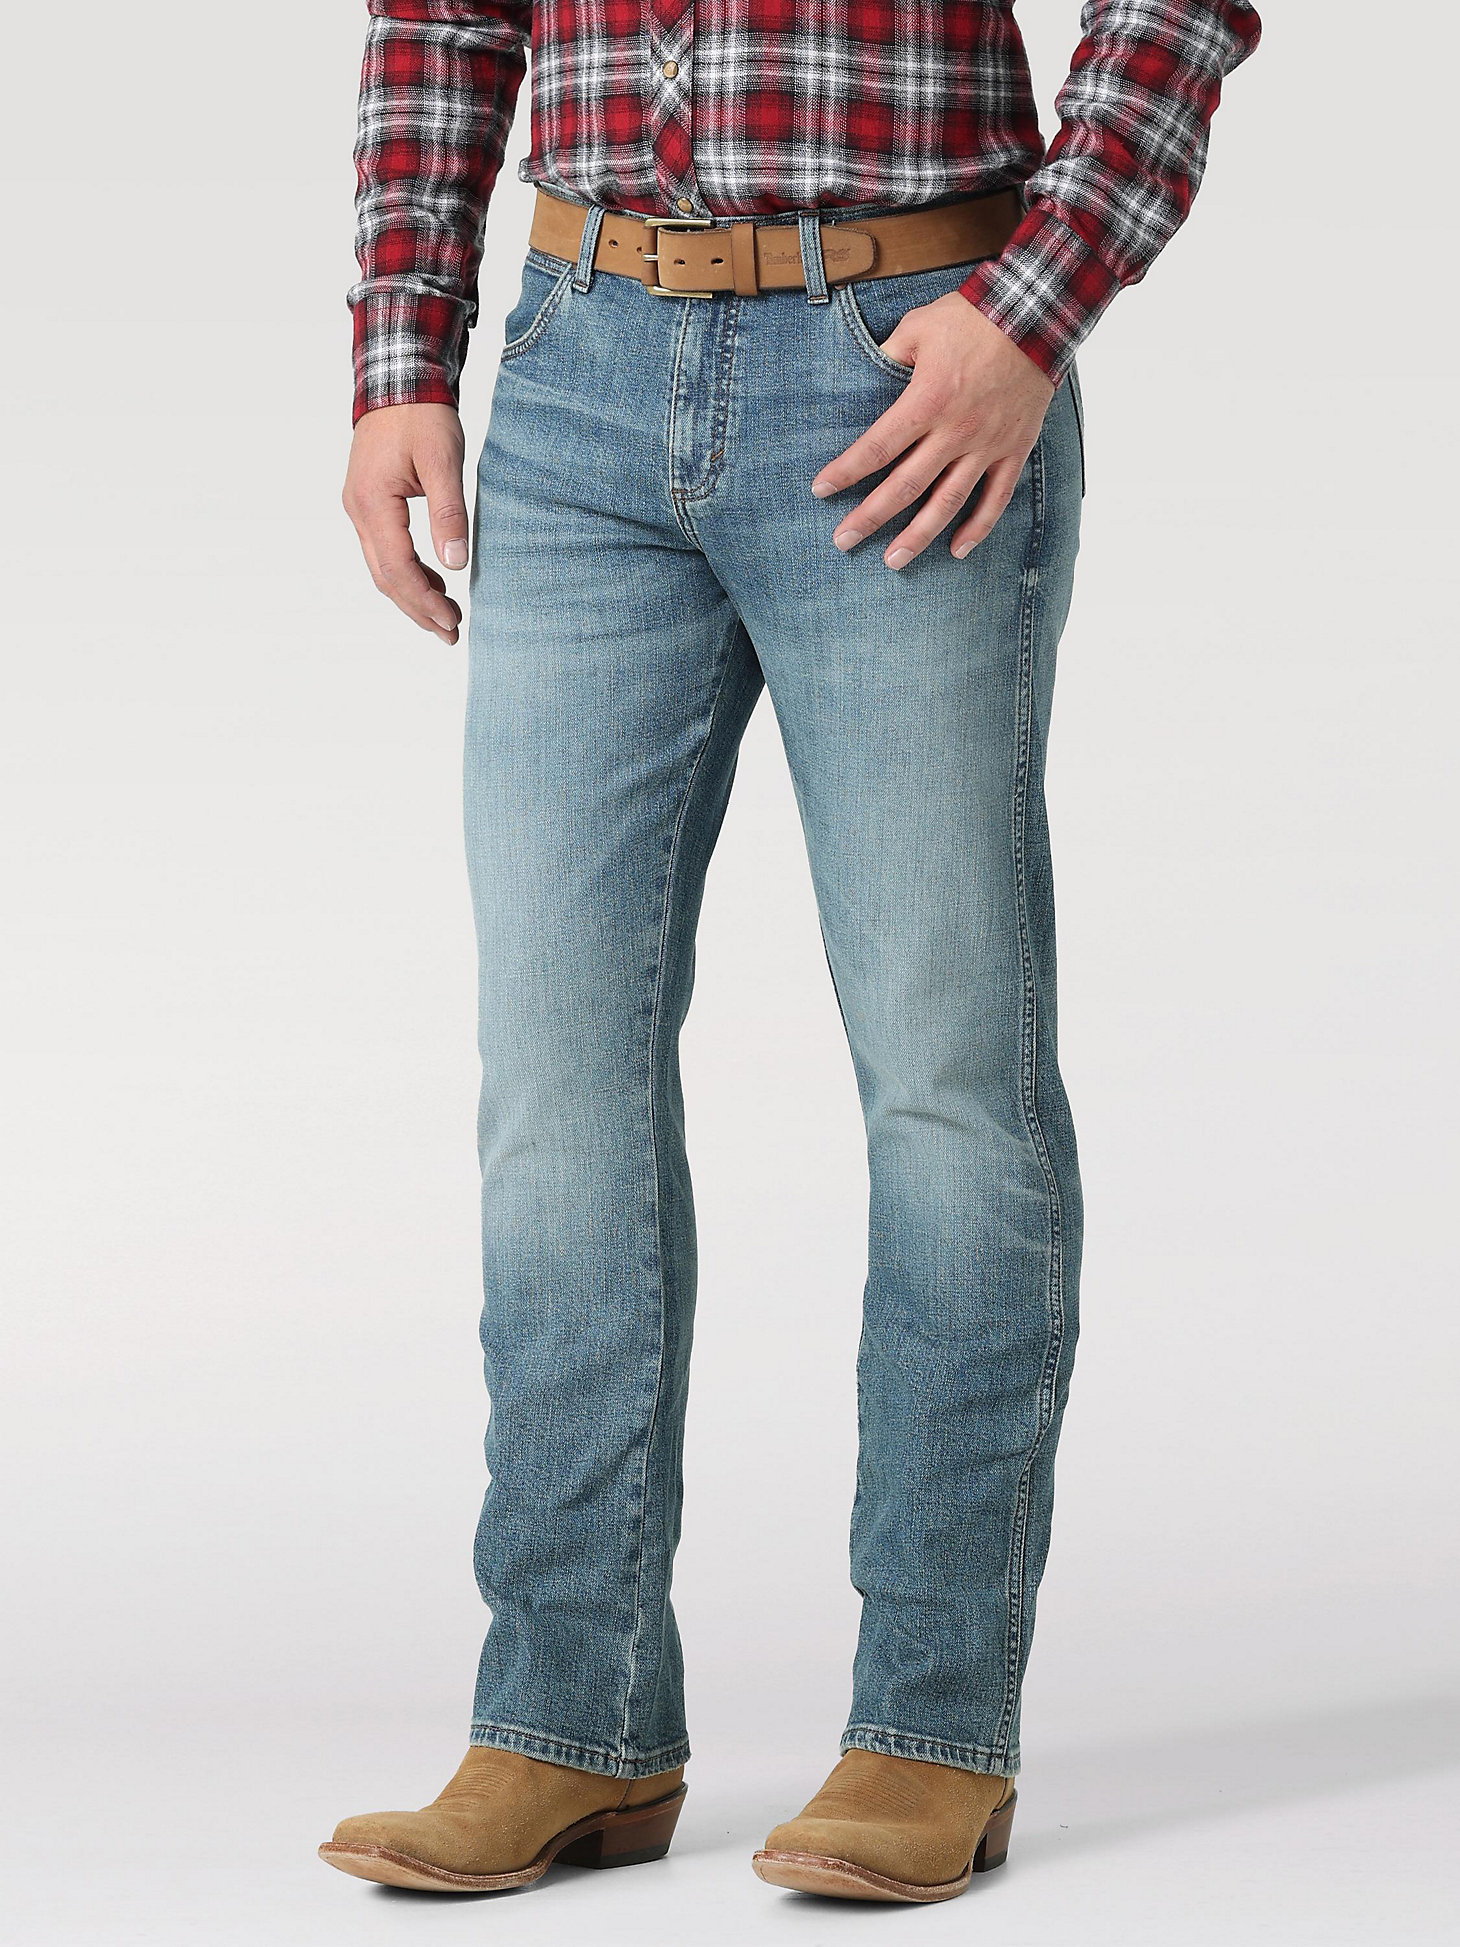 The Wrangler Retro® Premium Jean: Men's Slim Boot in Valley main view